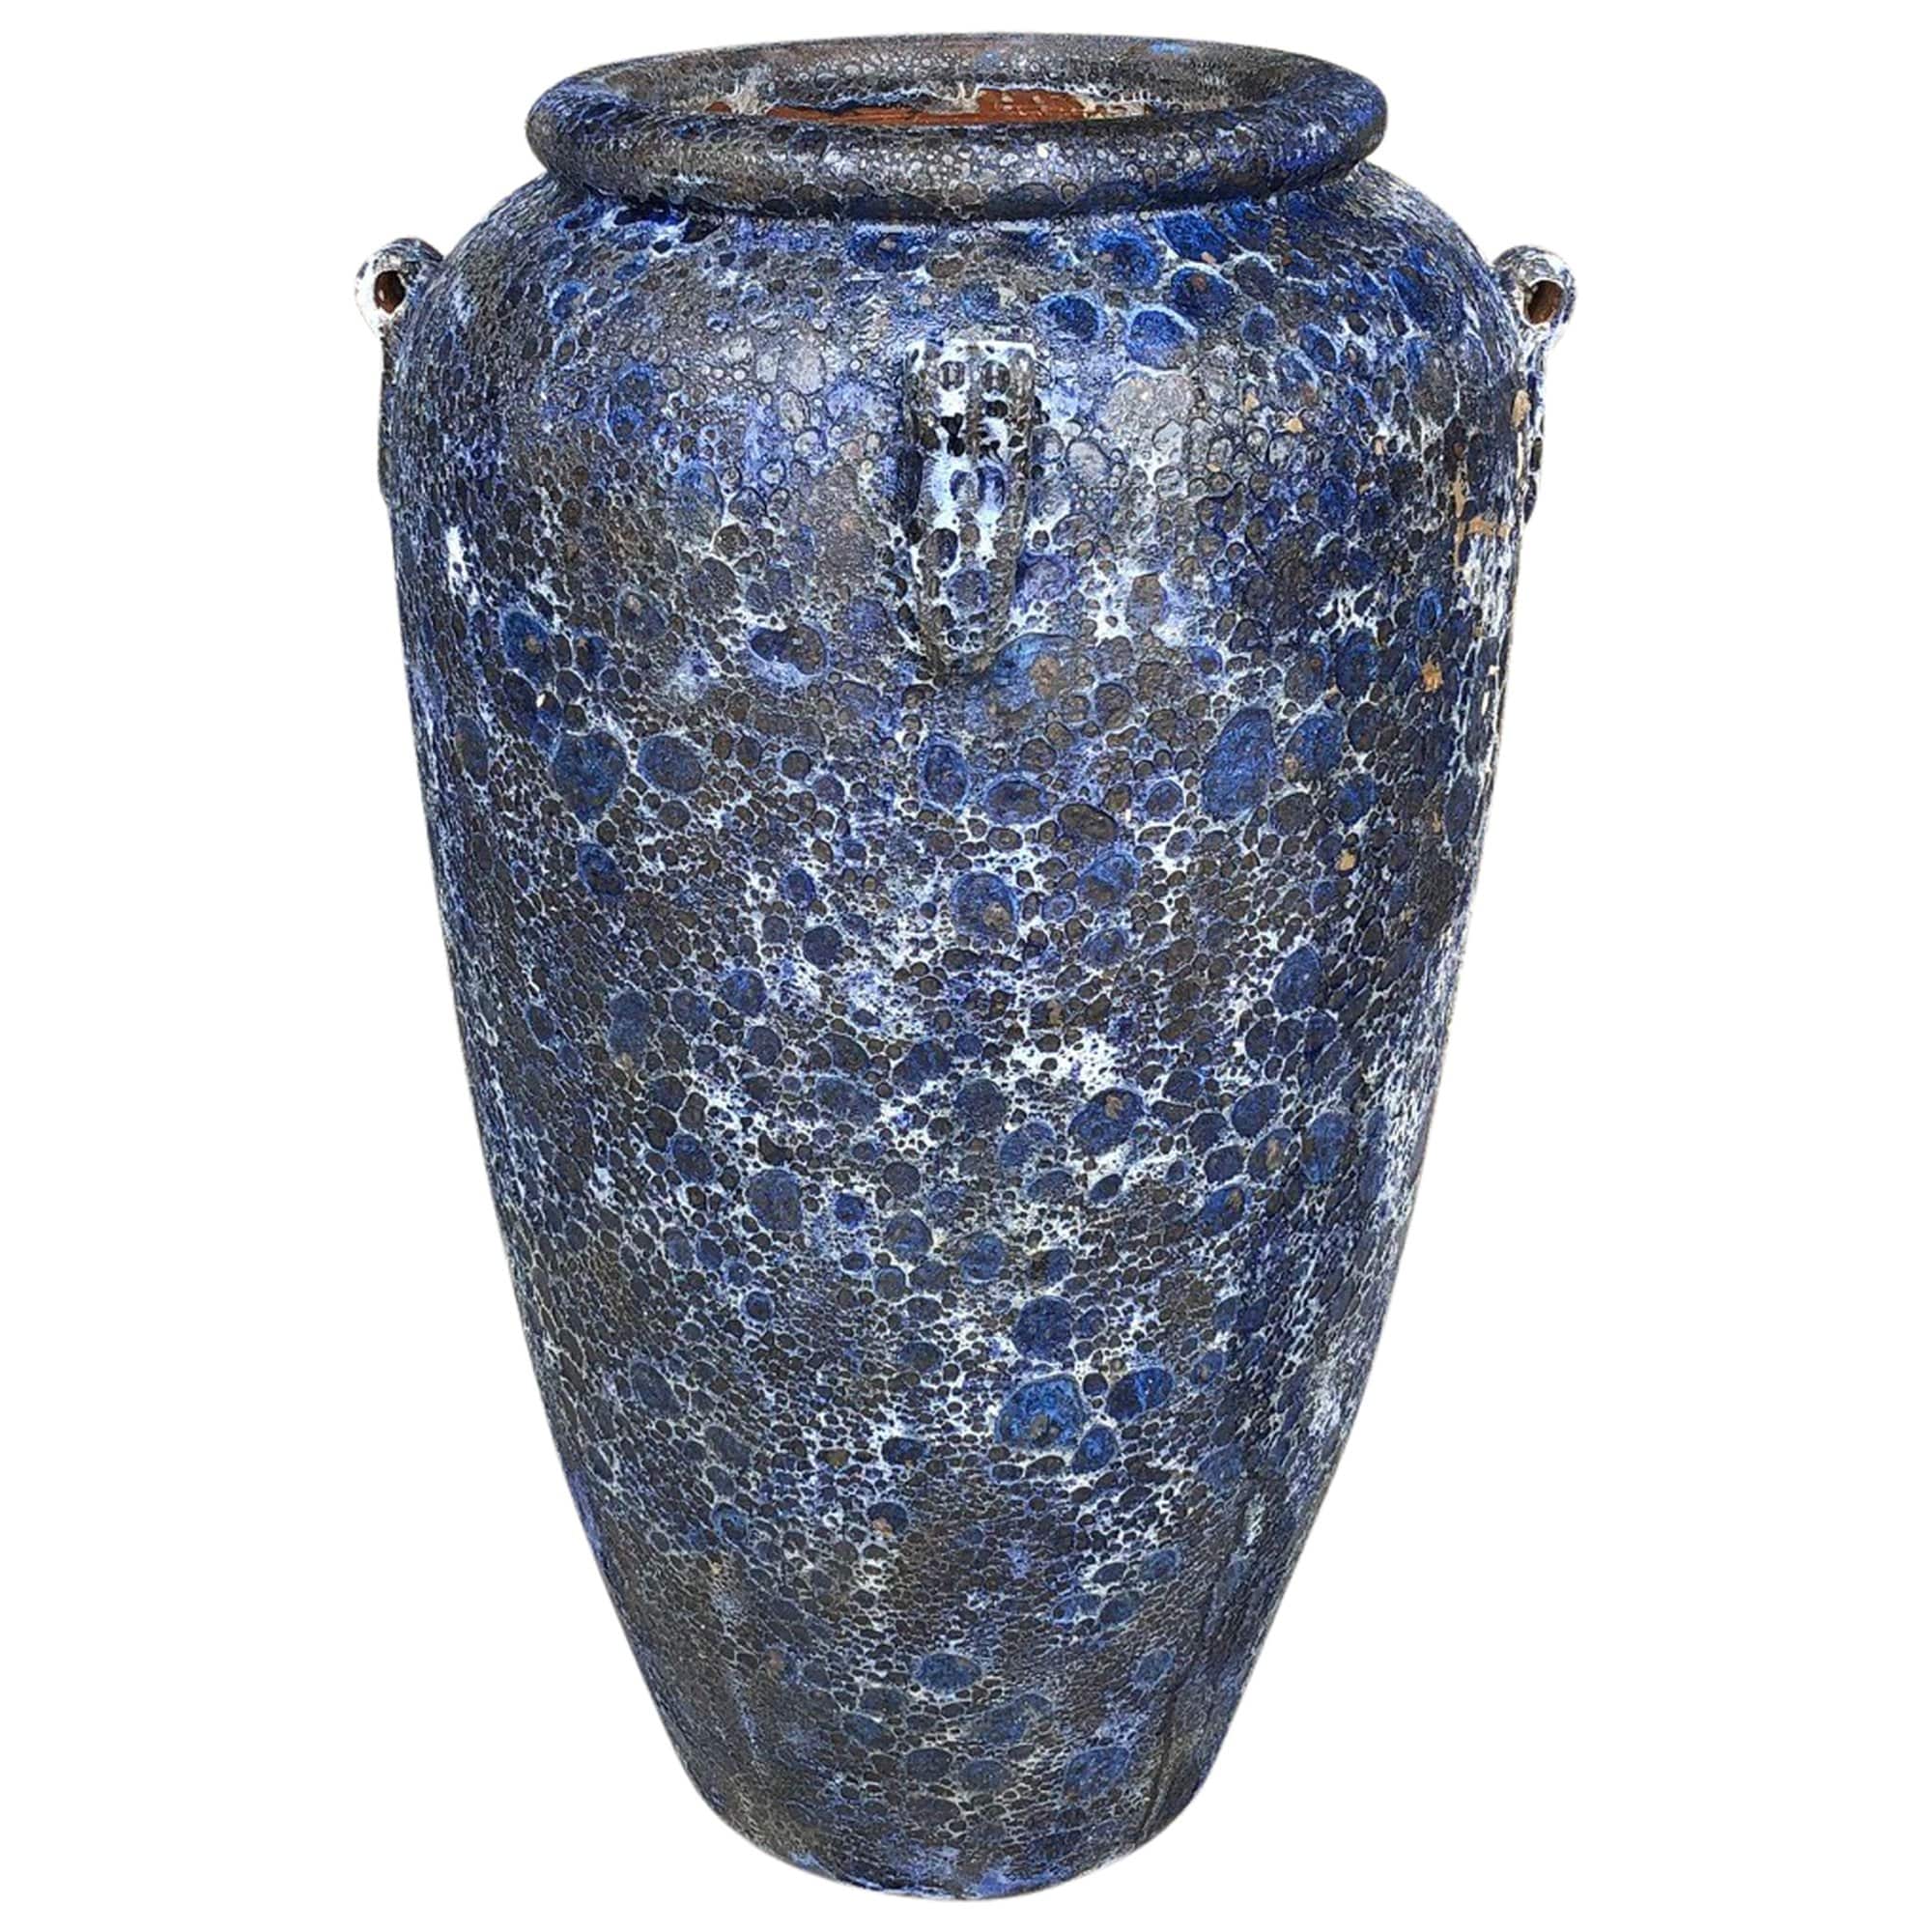 Sofia blue ceramic jar pot round big gratis bezorgen - online bestellen bij Potz Wonen